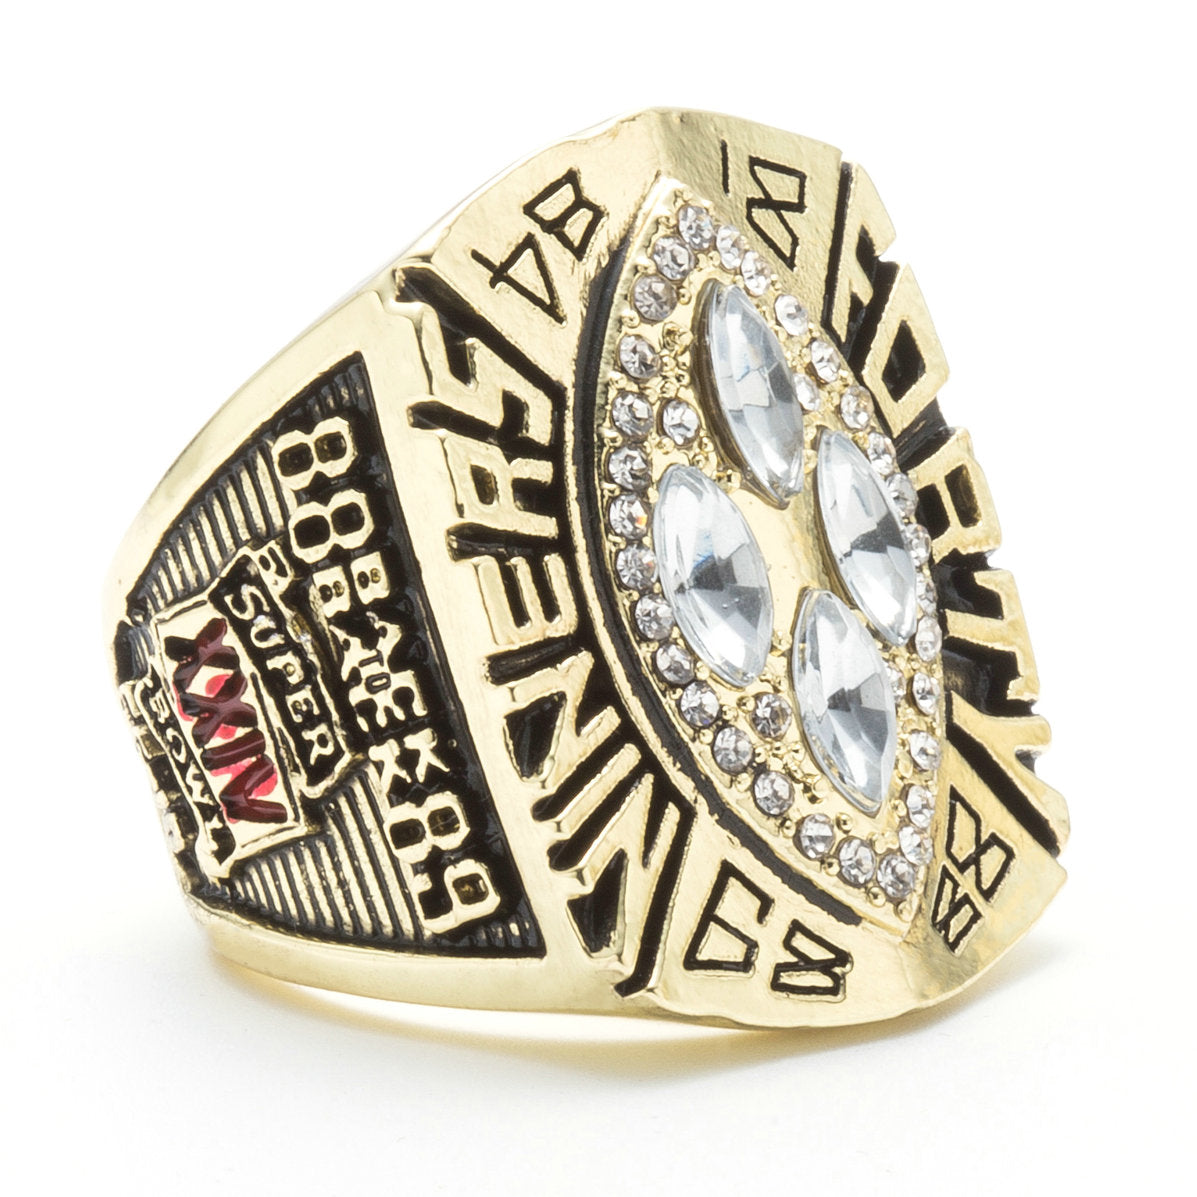 49ers superbowl rings